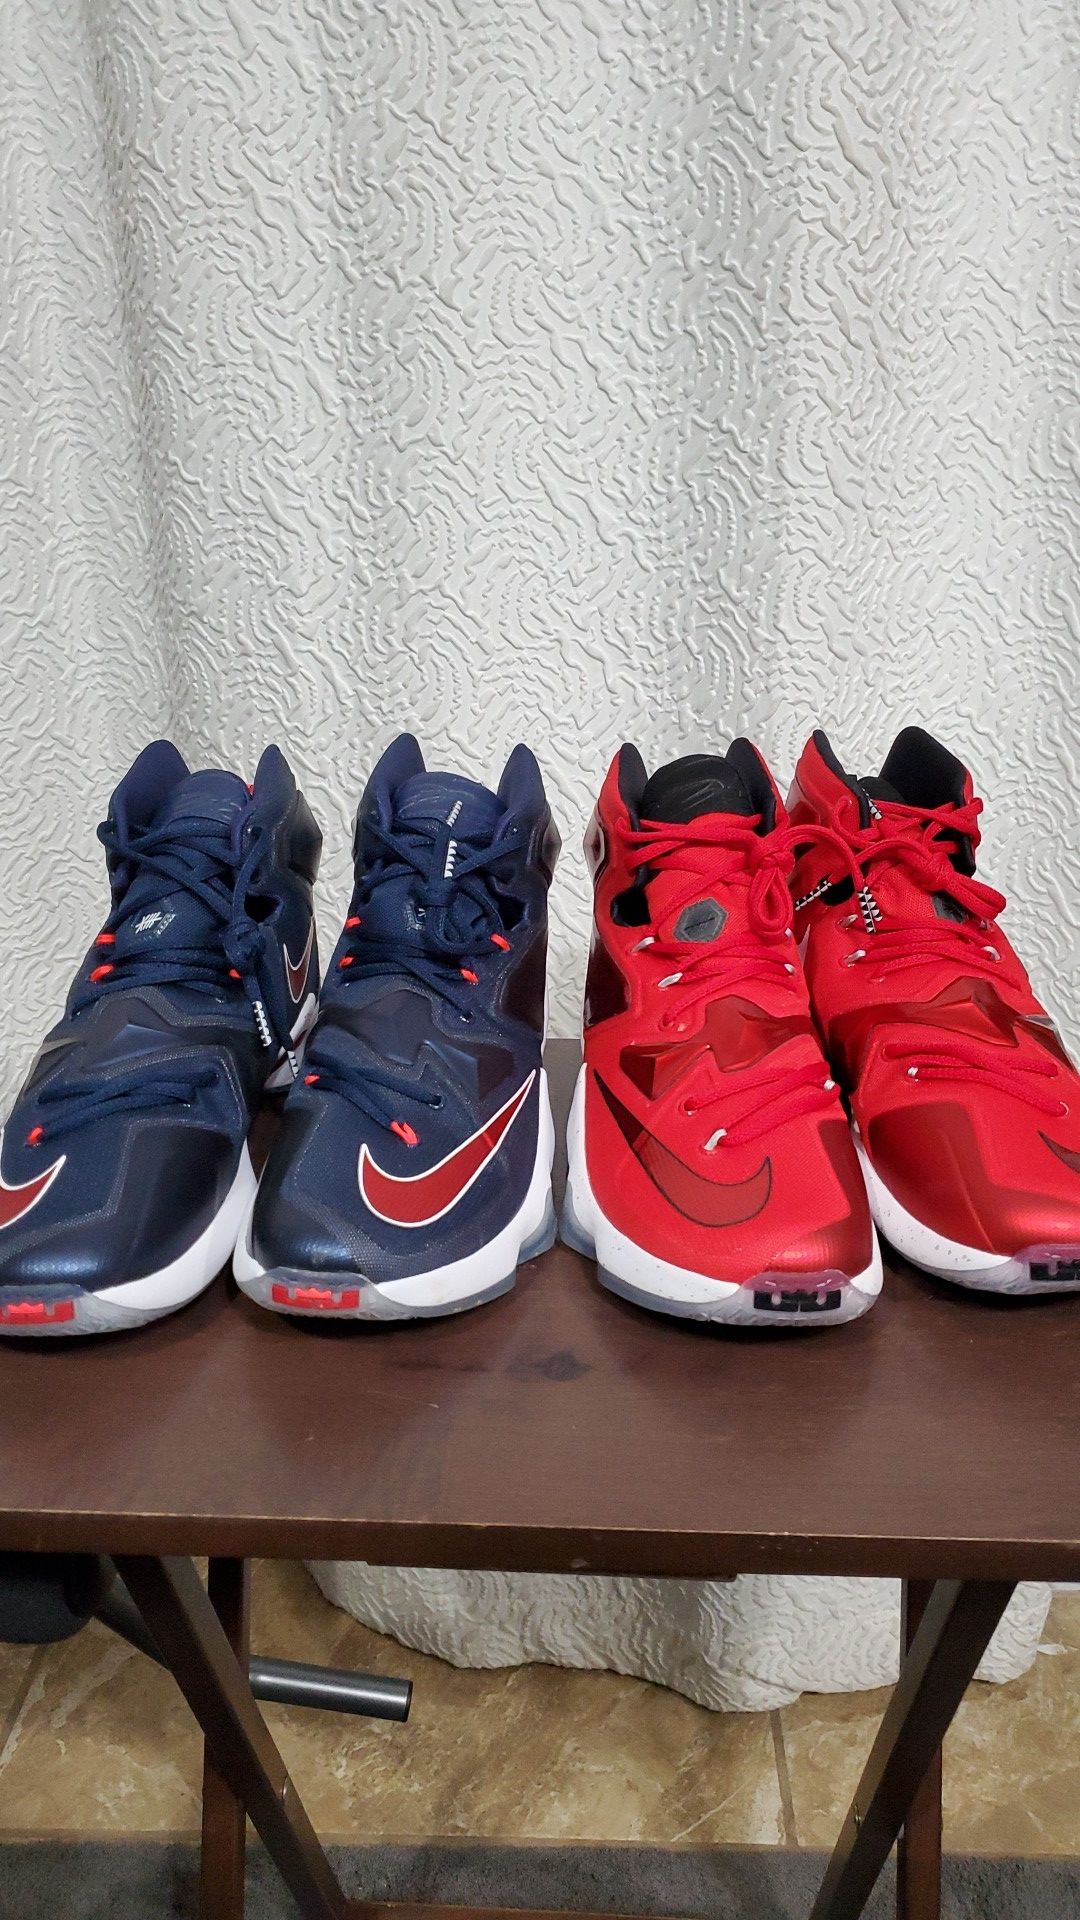 Nike lebron 13 size 12 ($140 for both pairs)